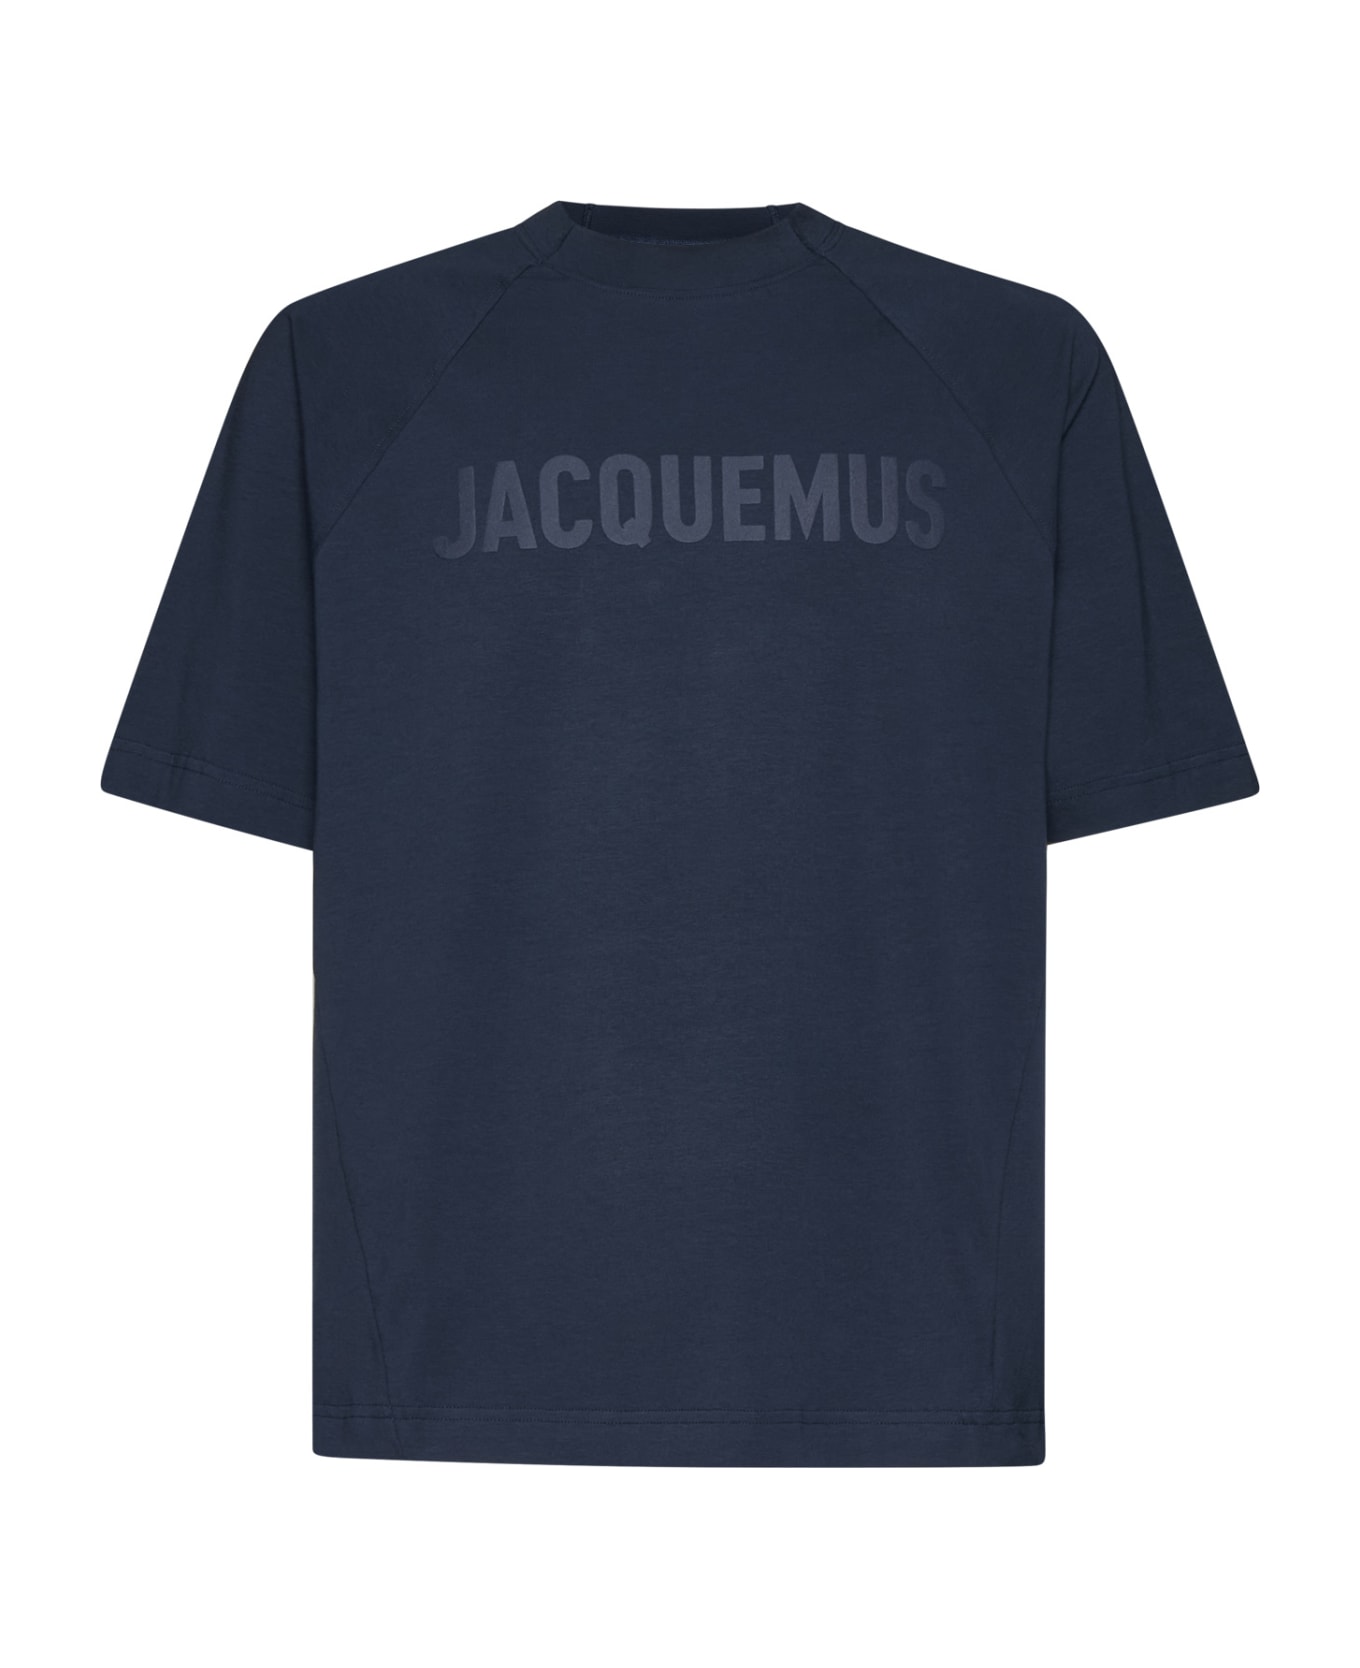 Jacquemus Typo Crewneck T-shirt - Dark navy